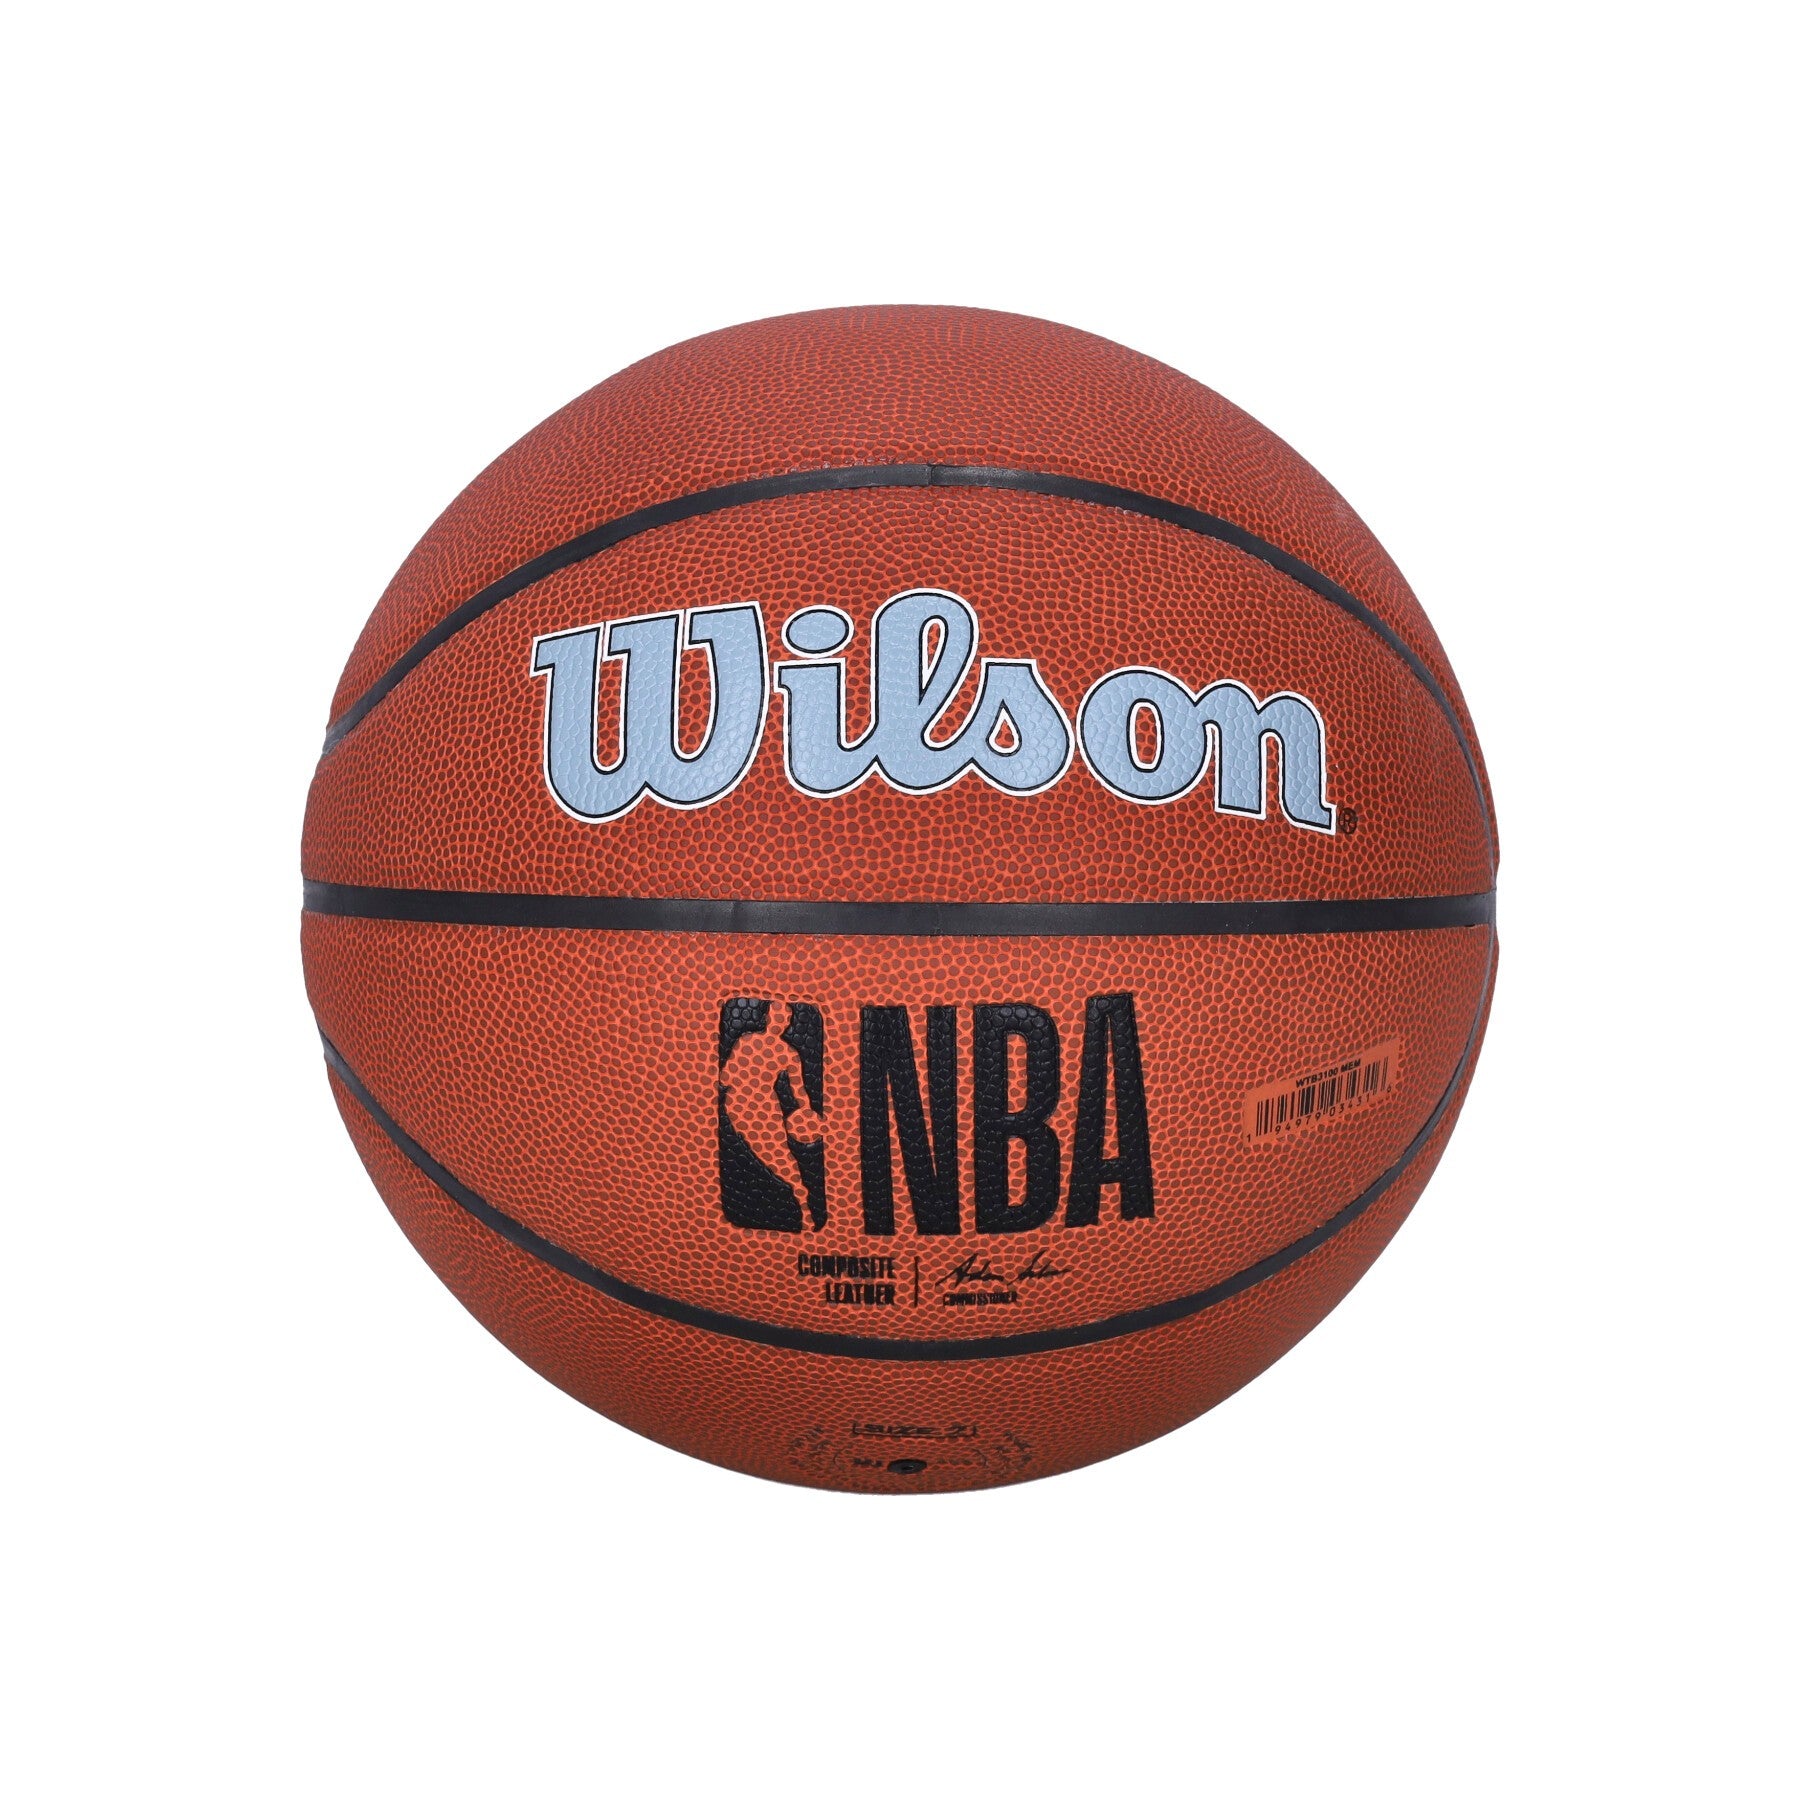 Men's NBA Team Alliance Basketball Size 7 Memgri Brown/original Team Colors